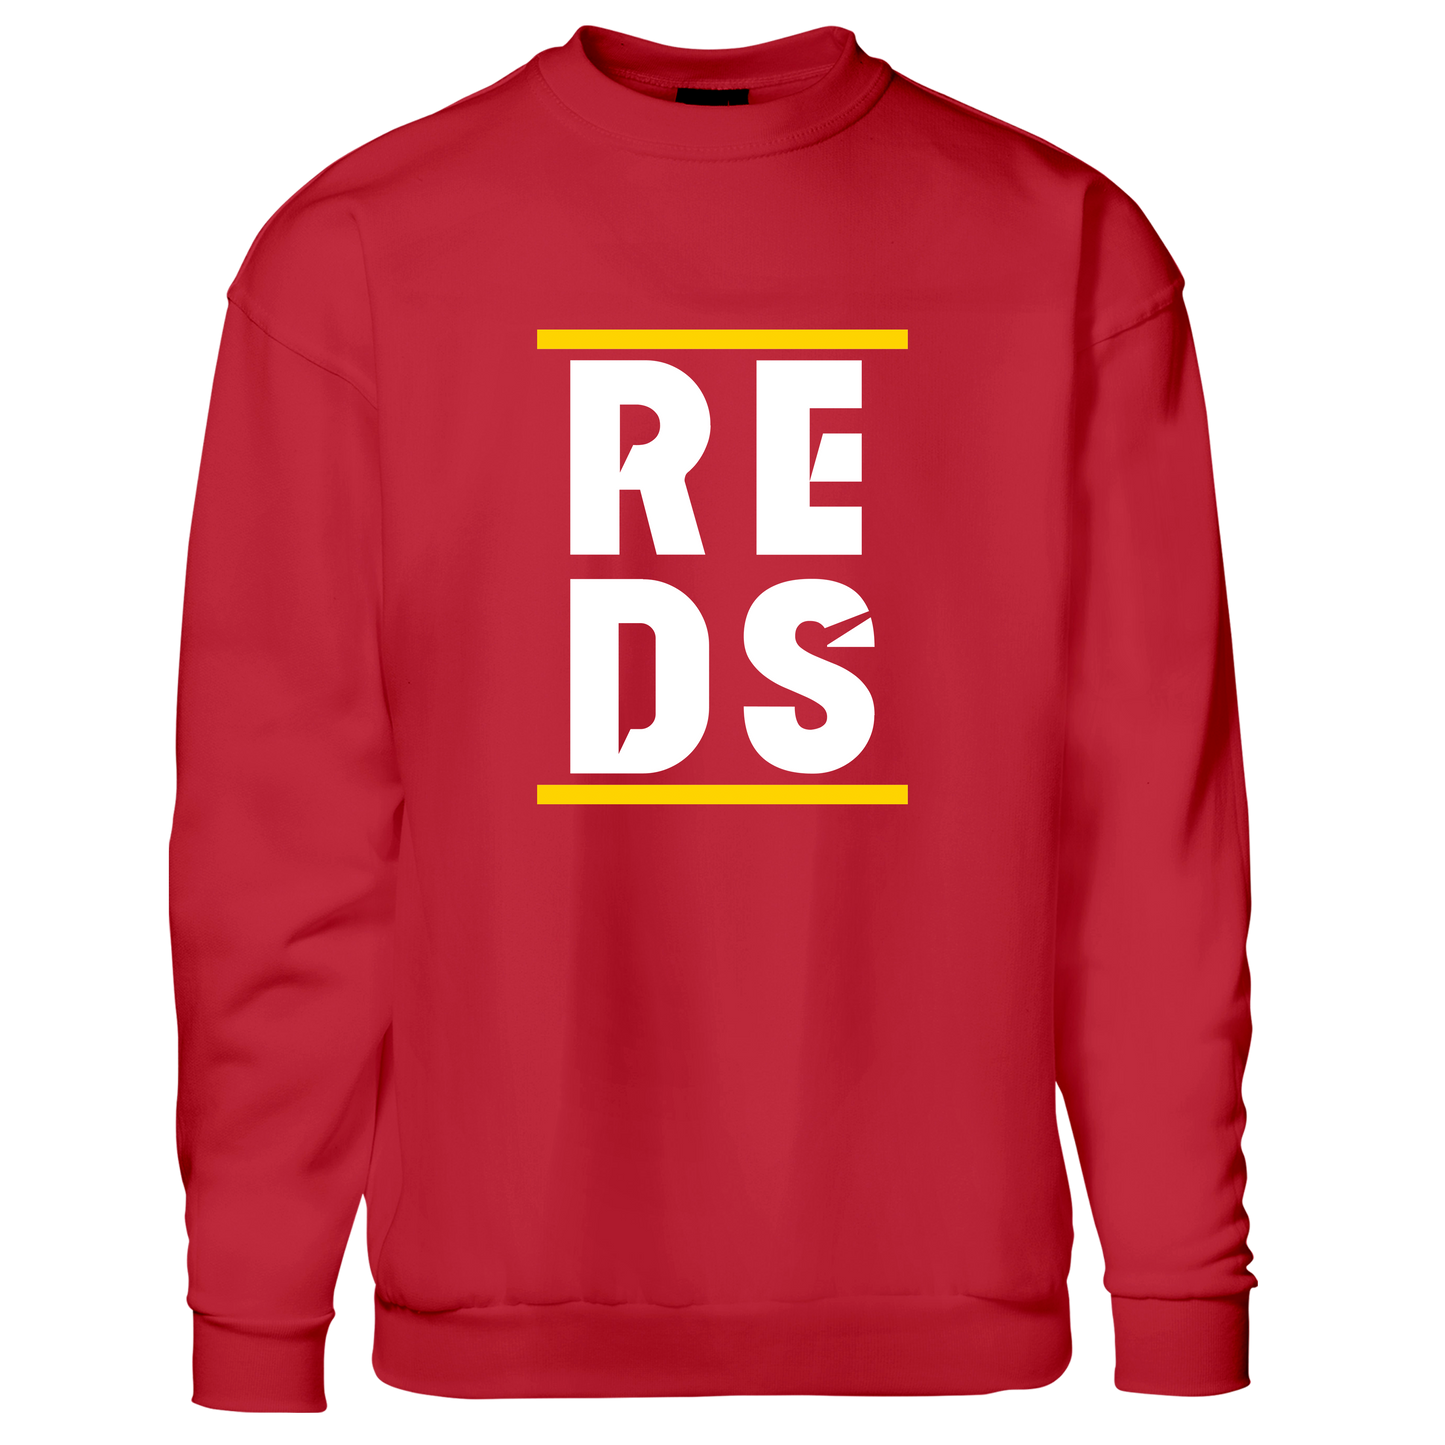 Reds - sweatshirt